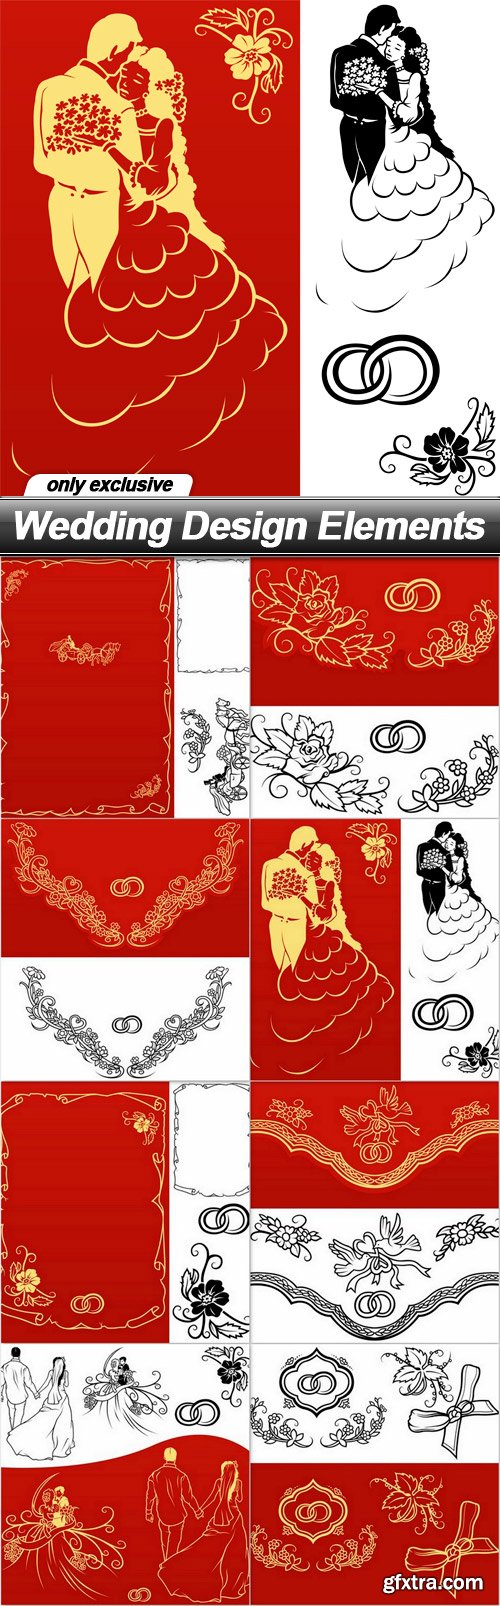 Wedding Design Elements - 8 UHQ JPEG